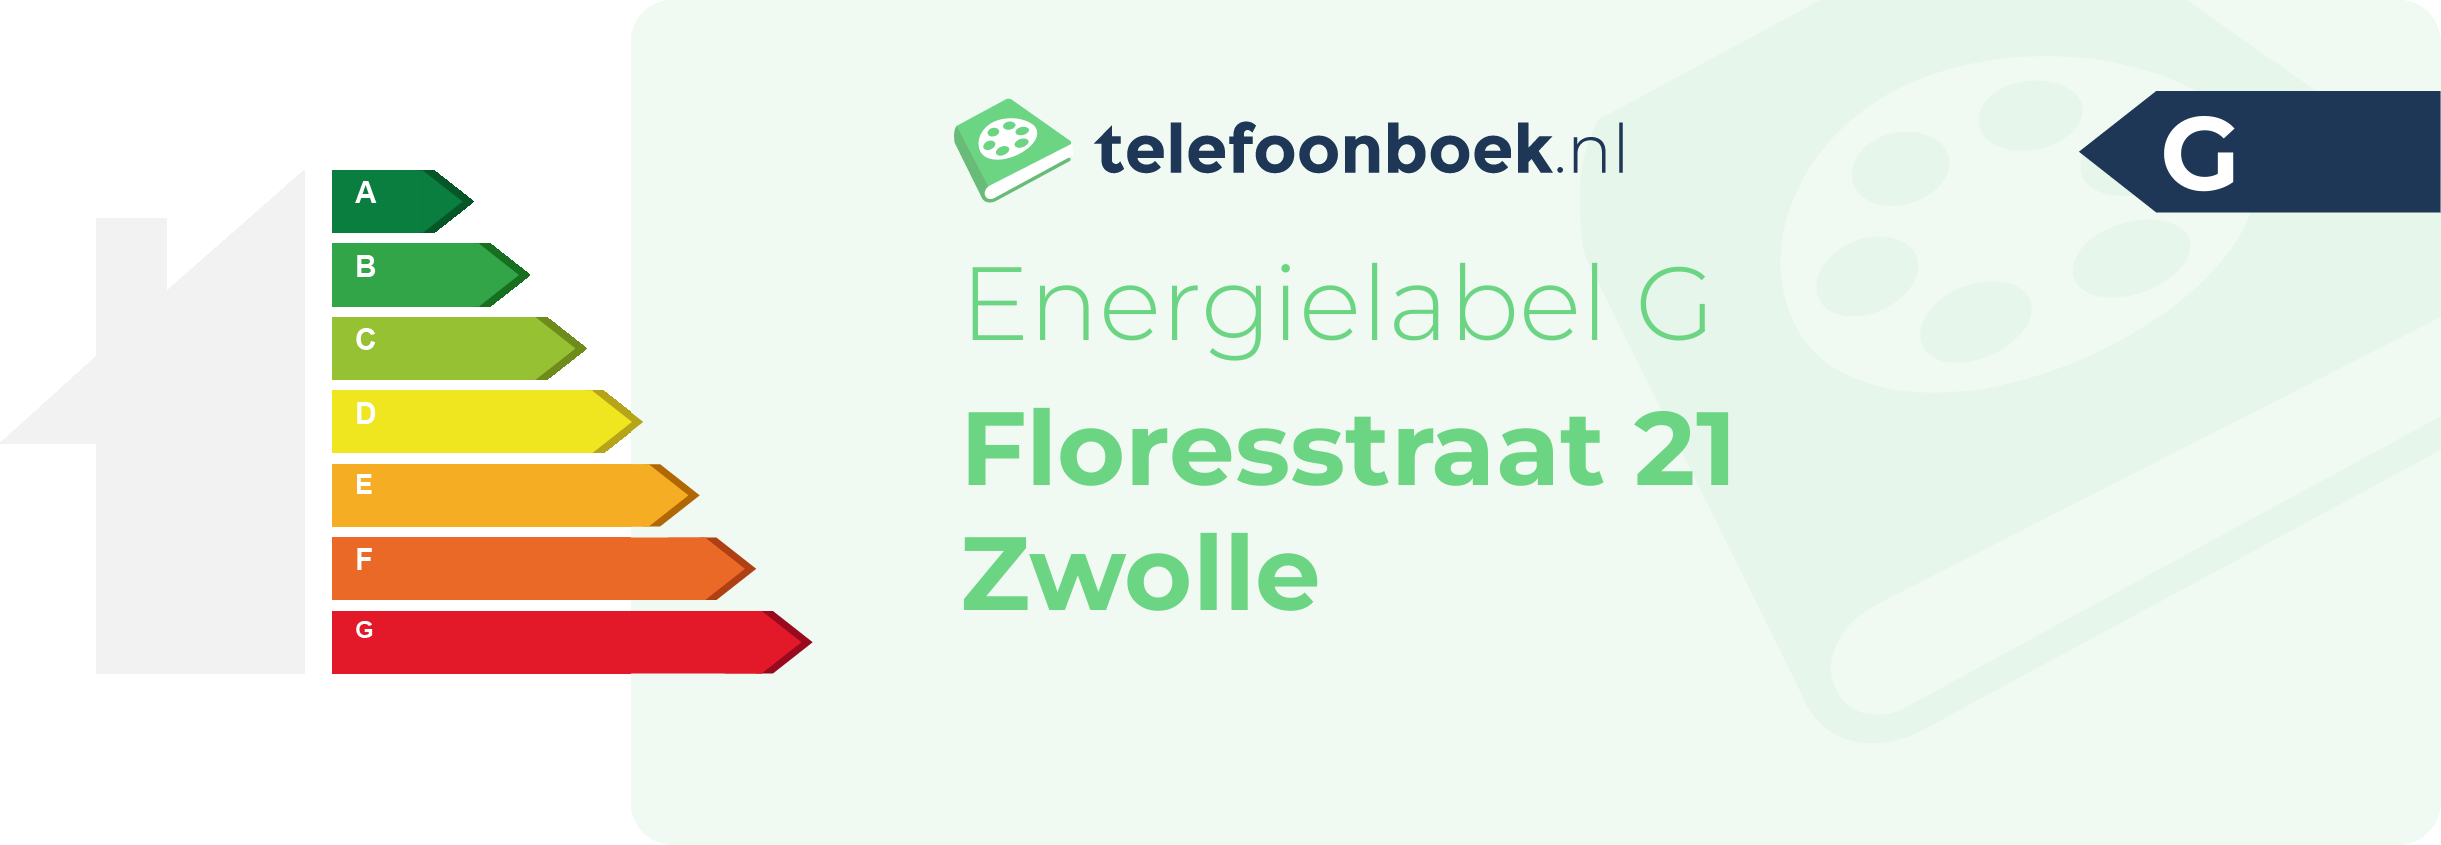 Energielabel Floresstraat 21 Zwolle